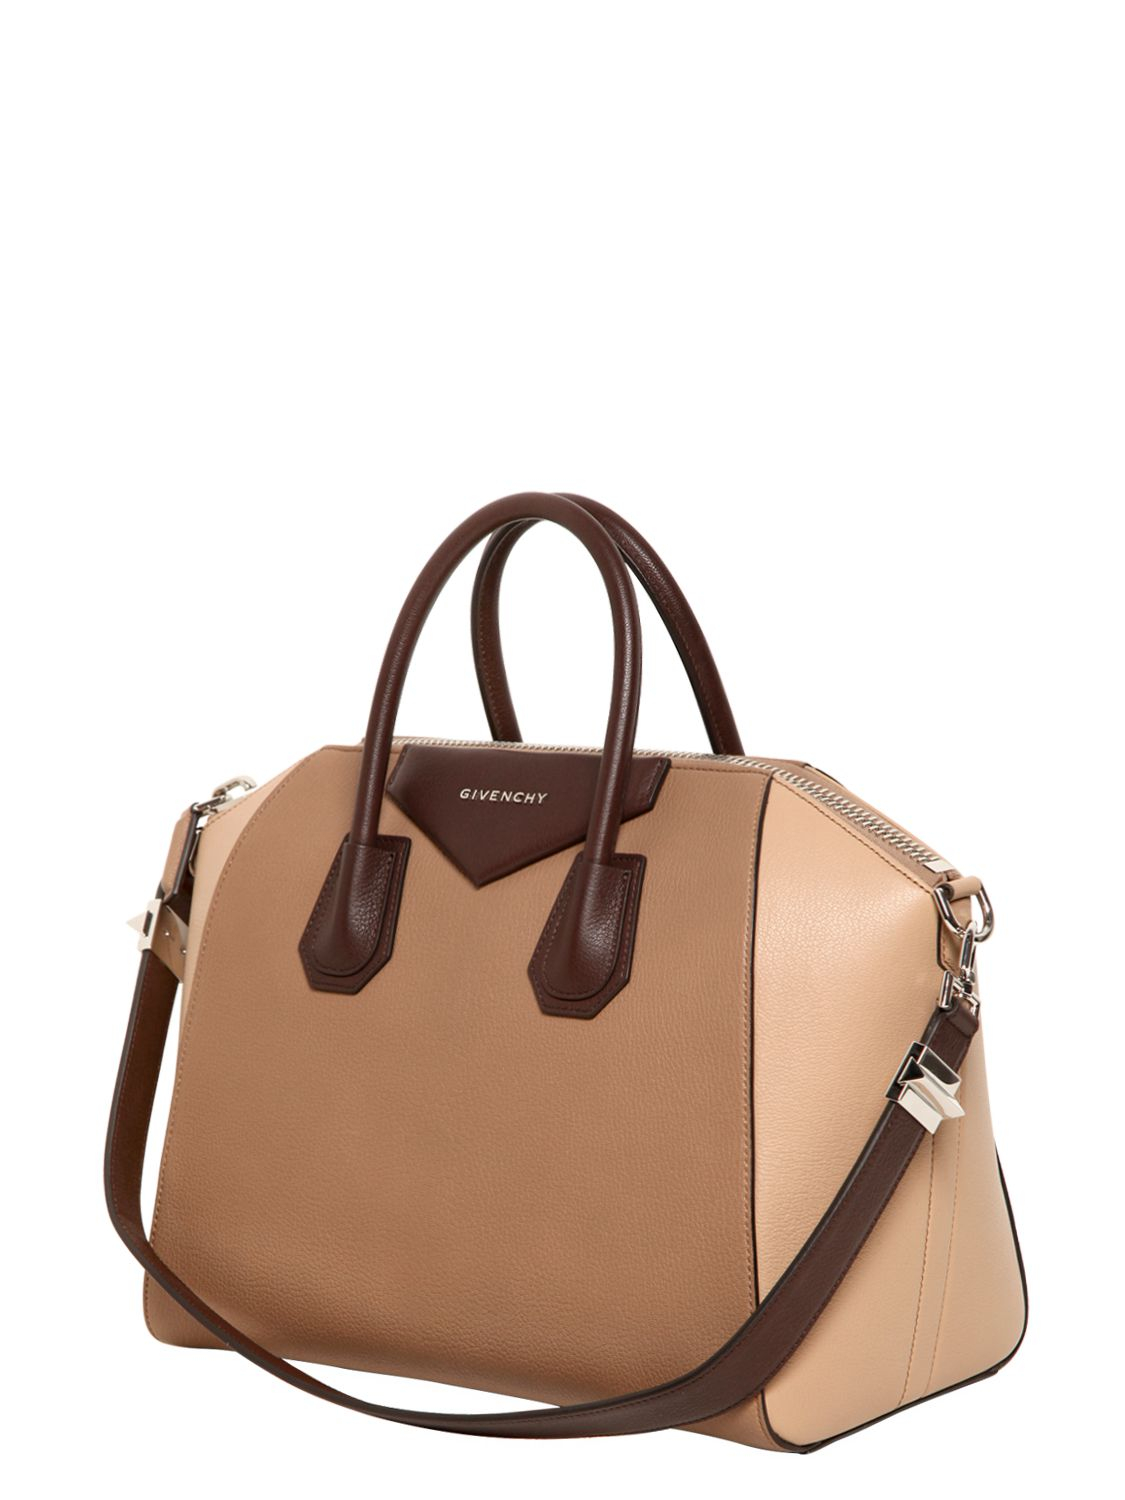 Lyst - Givenchy Medium Antigona Grained Leather Bag in Brown